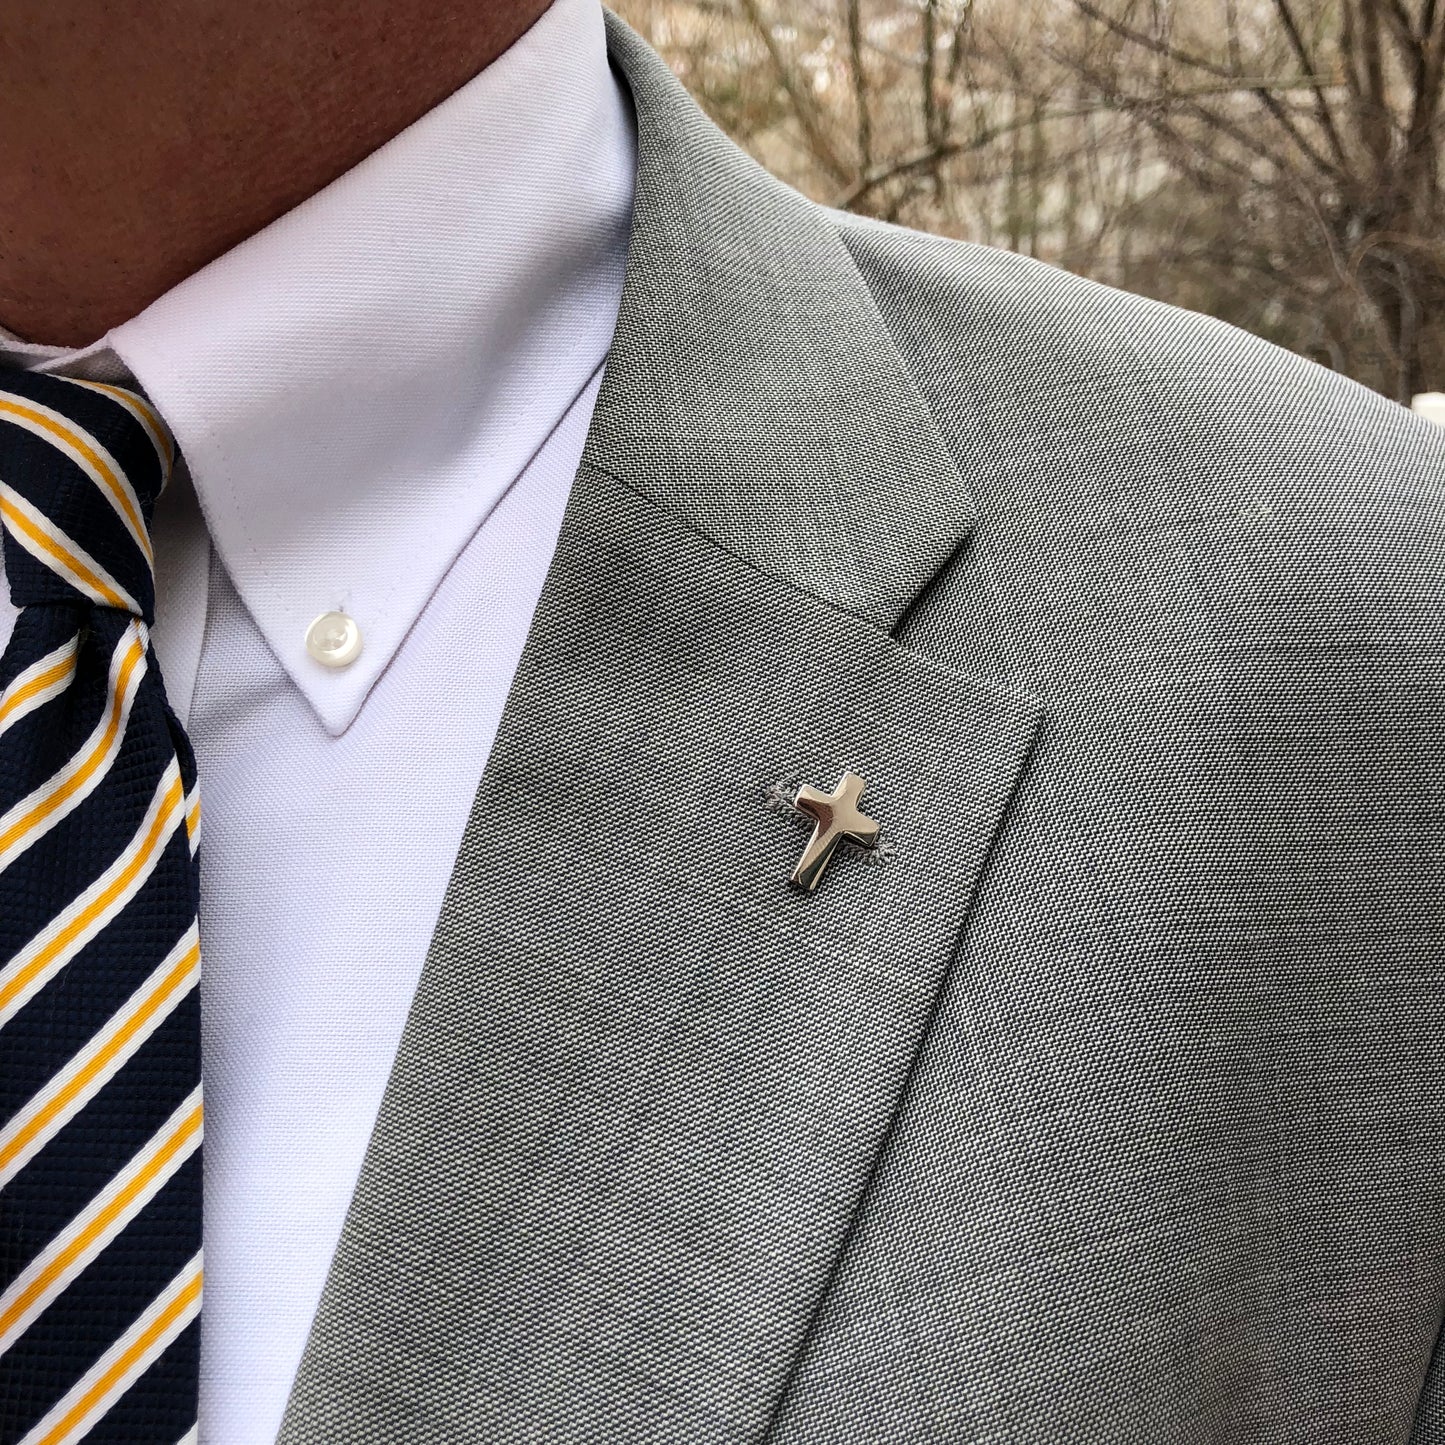 Christian Cross Lapel Pin Holy Father Cut Out Design Enamel Pin Silver Cross Tone 3D Cross Pin Tie Tack Lanyard Pins